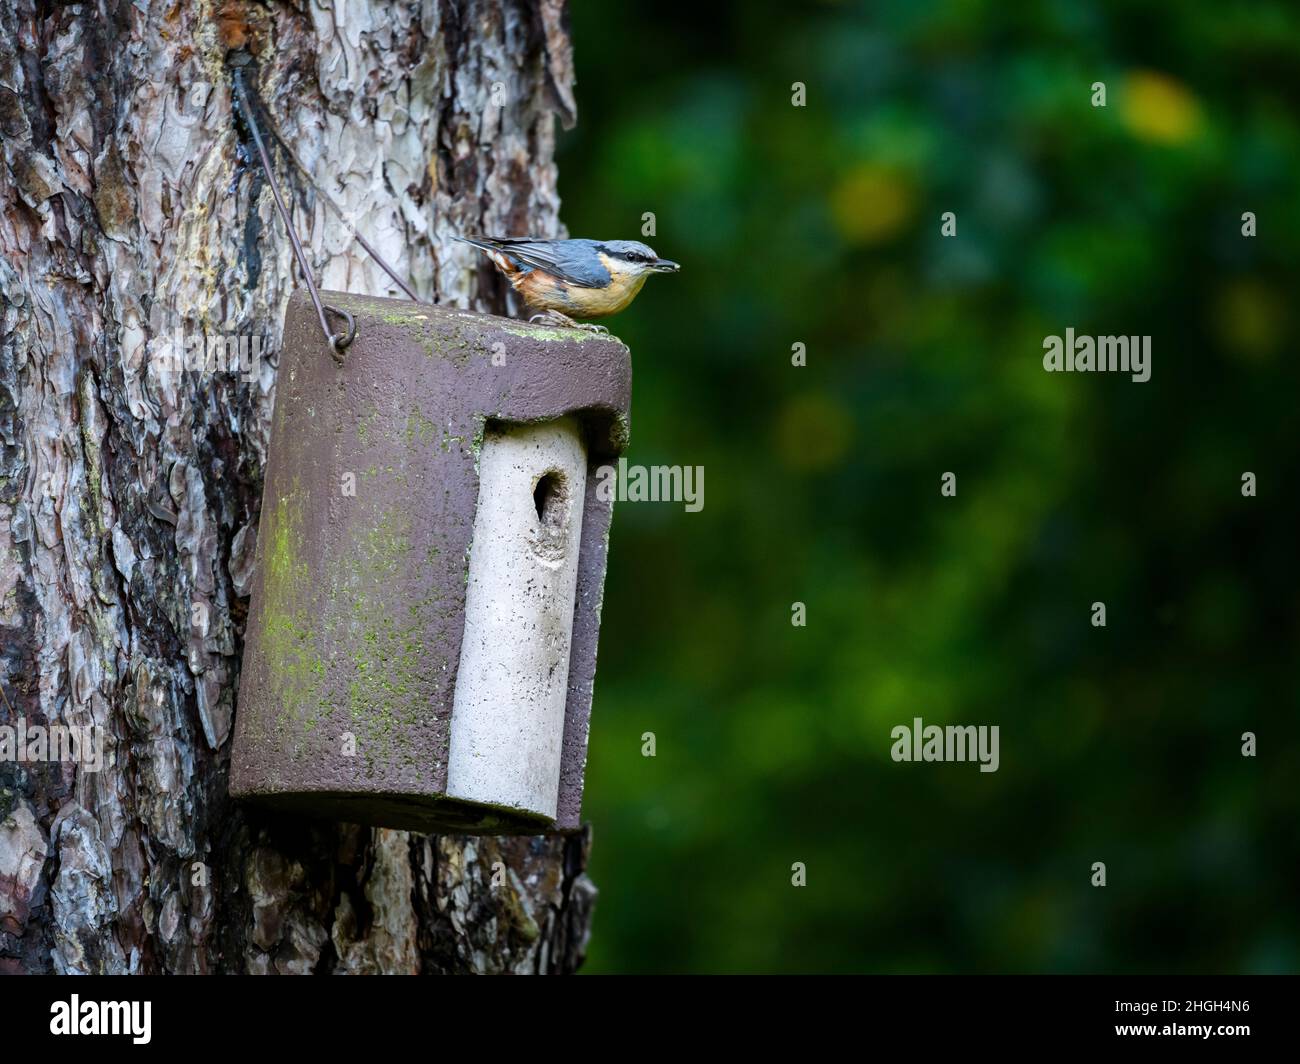 Close-up of single, small nuthatch (garden bird) standing on tree-hanging nest box by entrance hole (eye-stripe & beak) - West Yorkshire, England, UK. Stock Photo